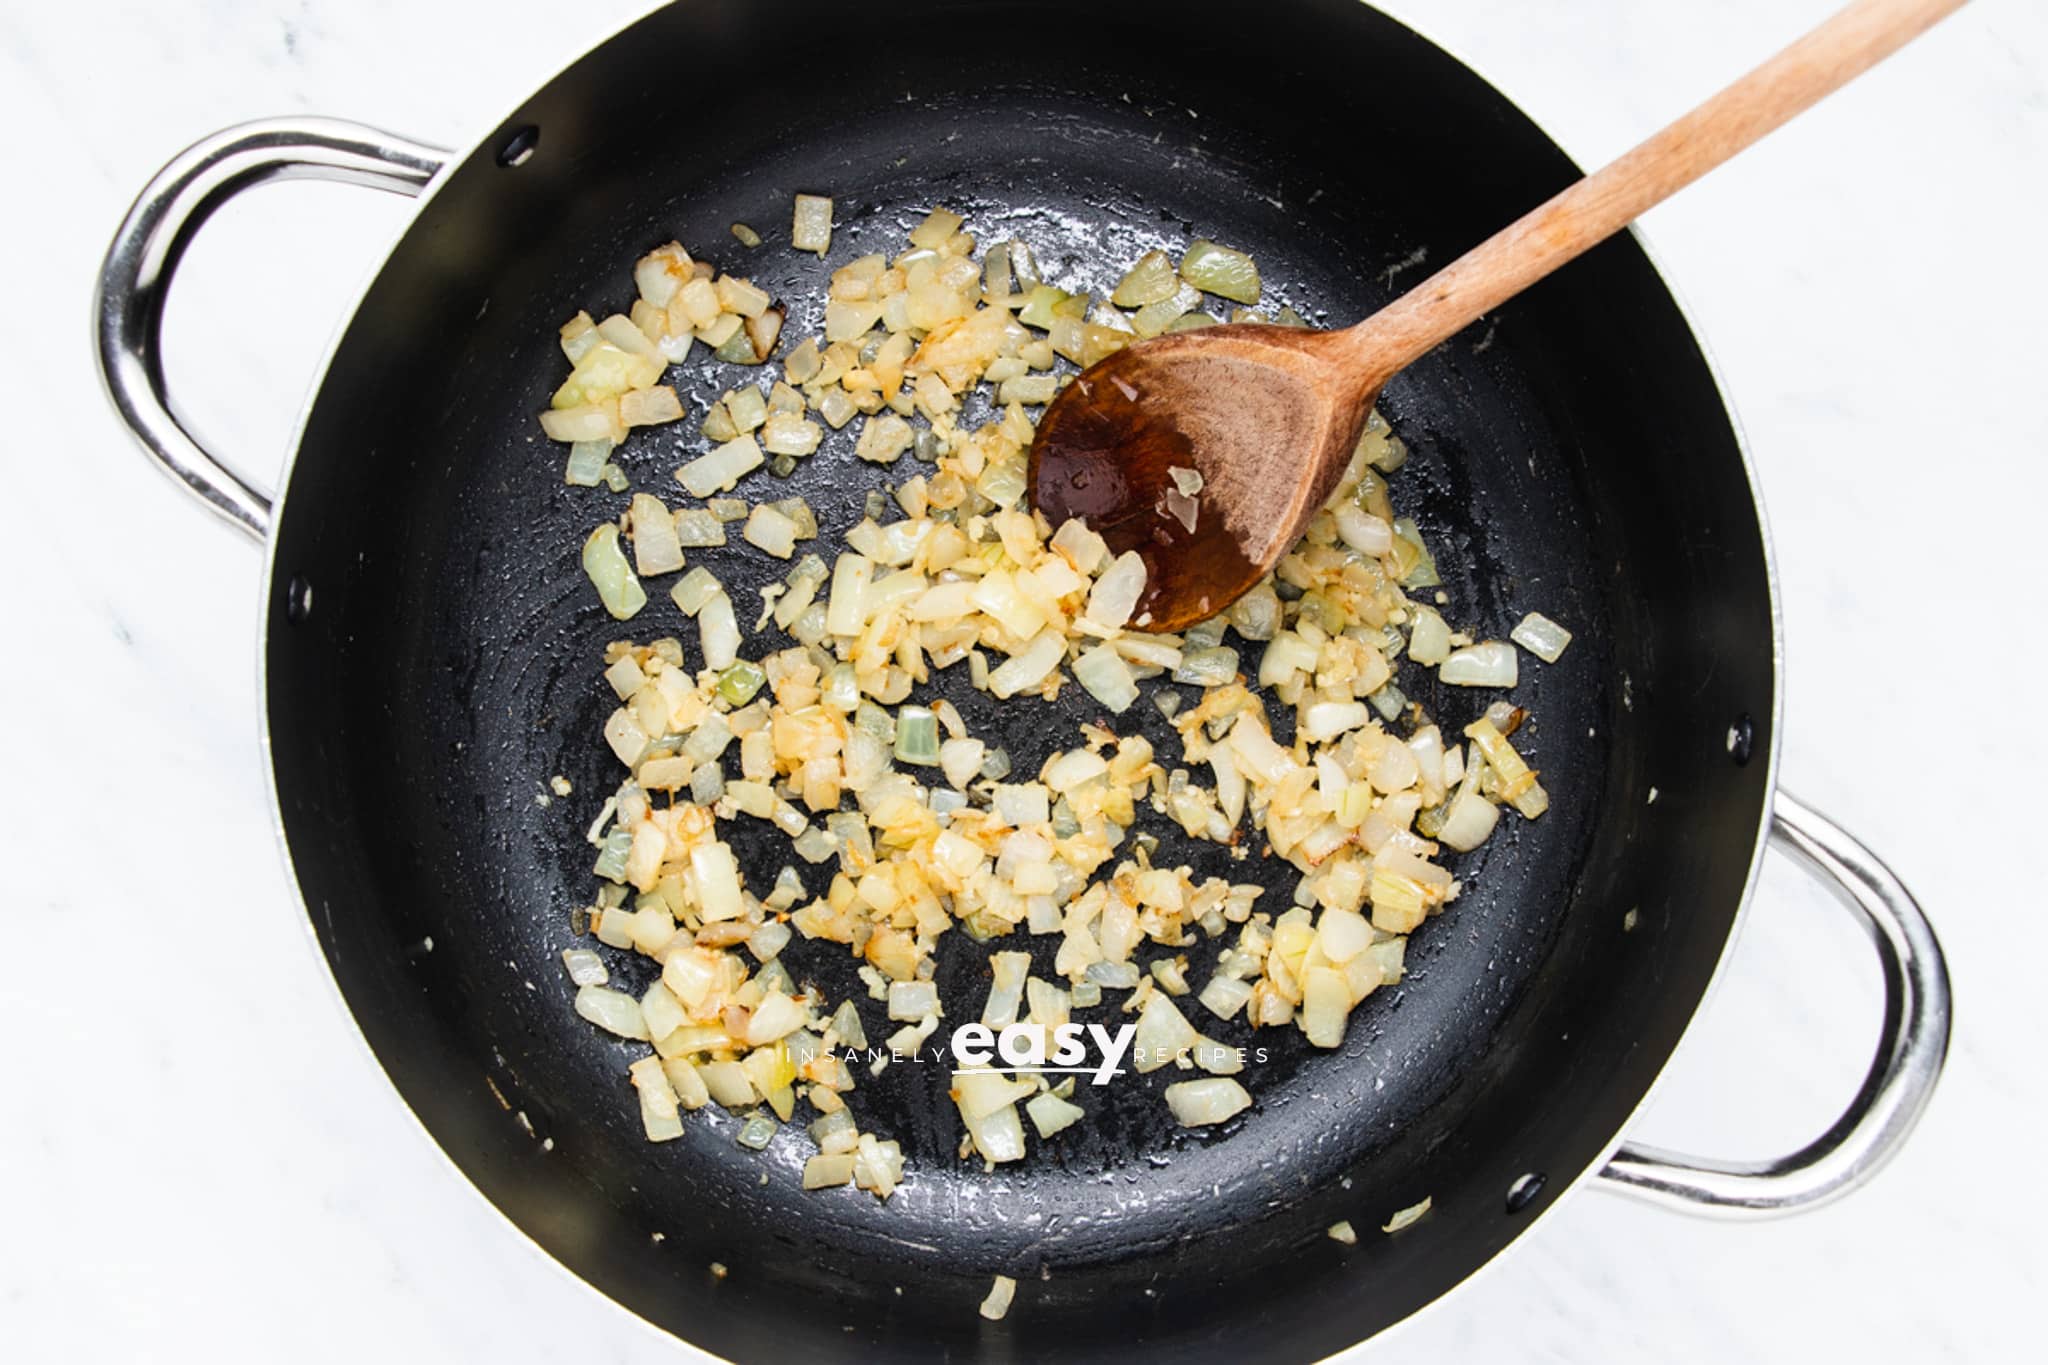 onion and garlic sauteing in a saucepan.